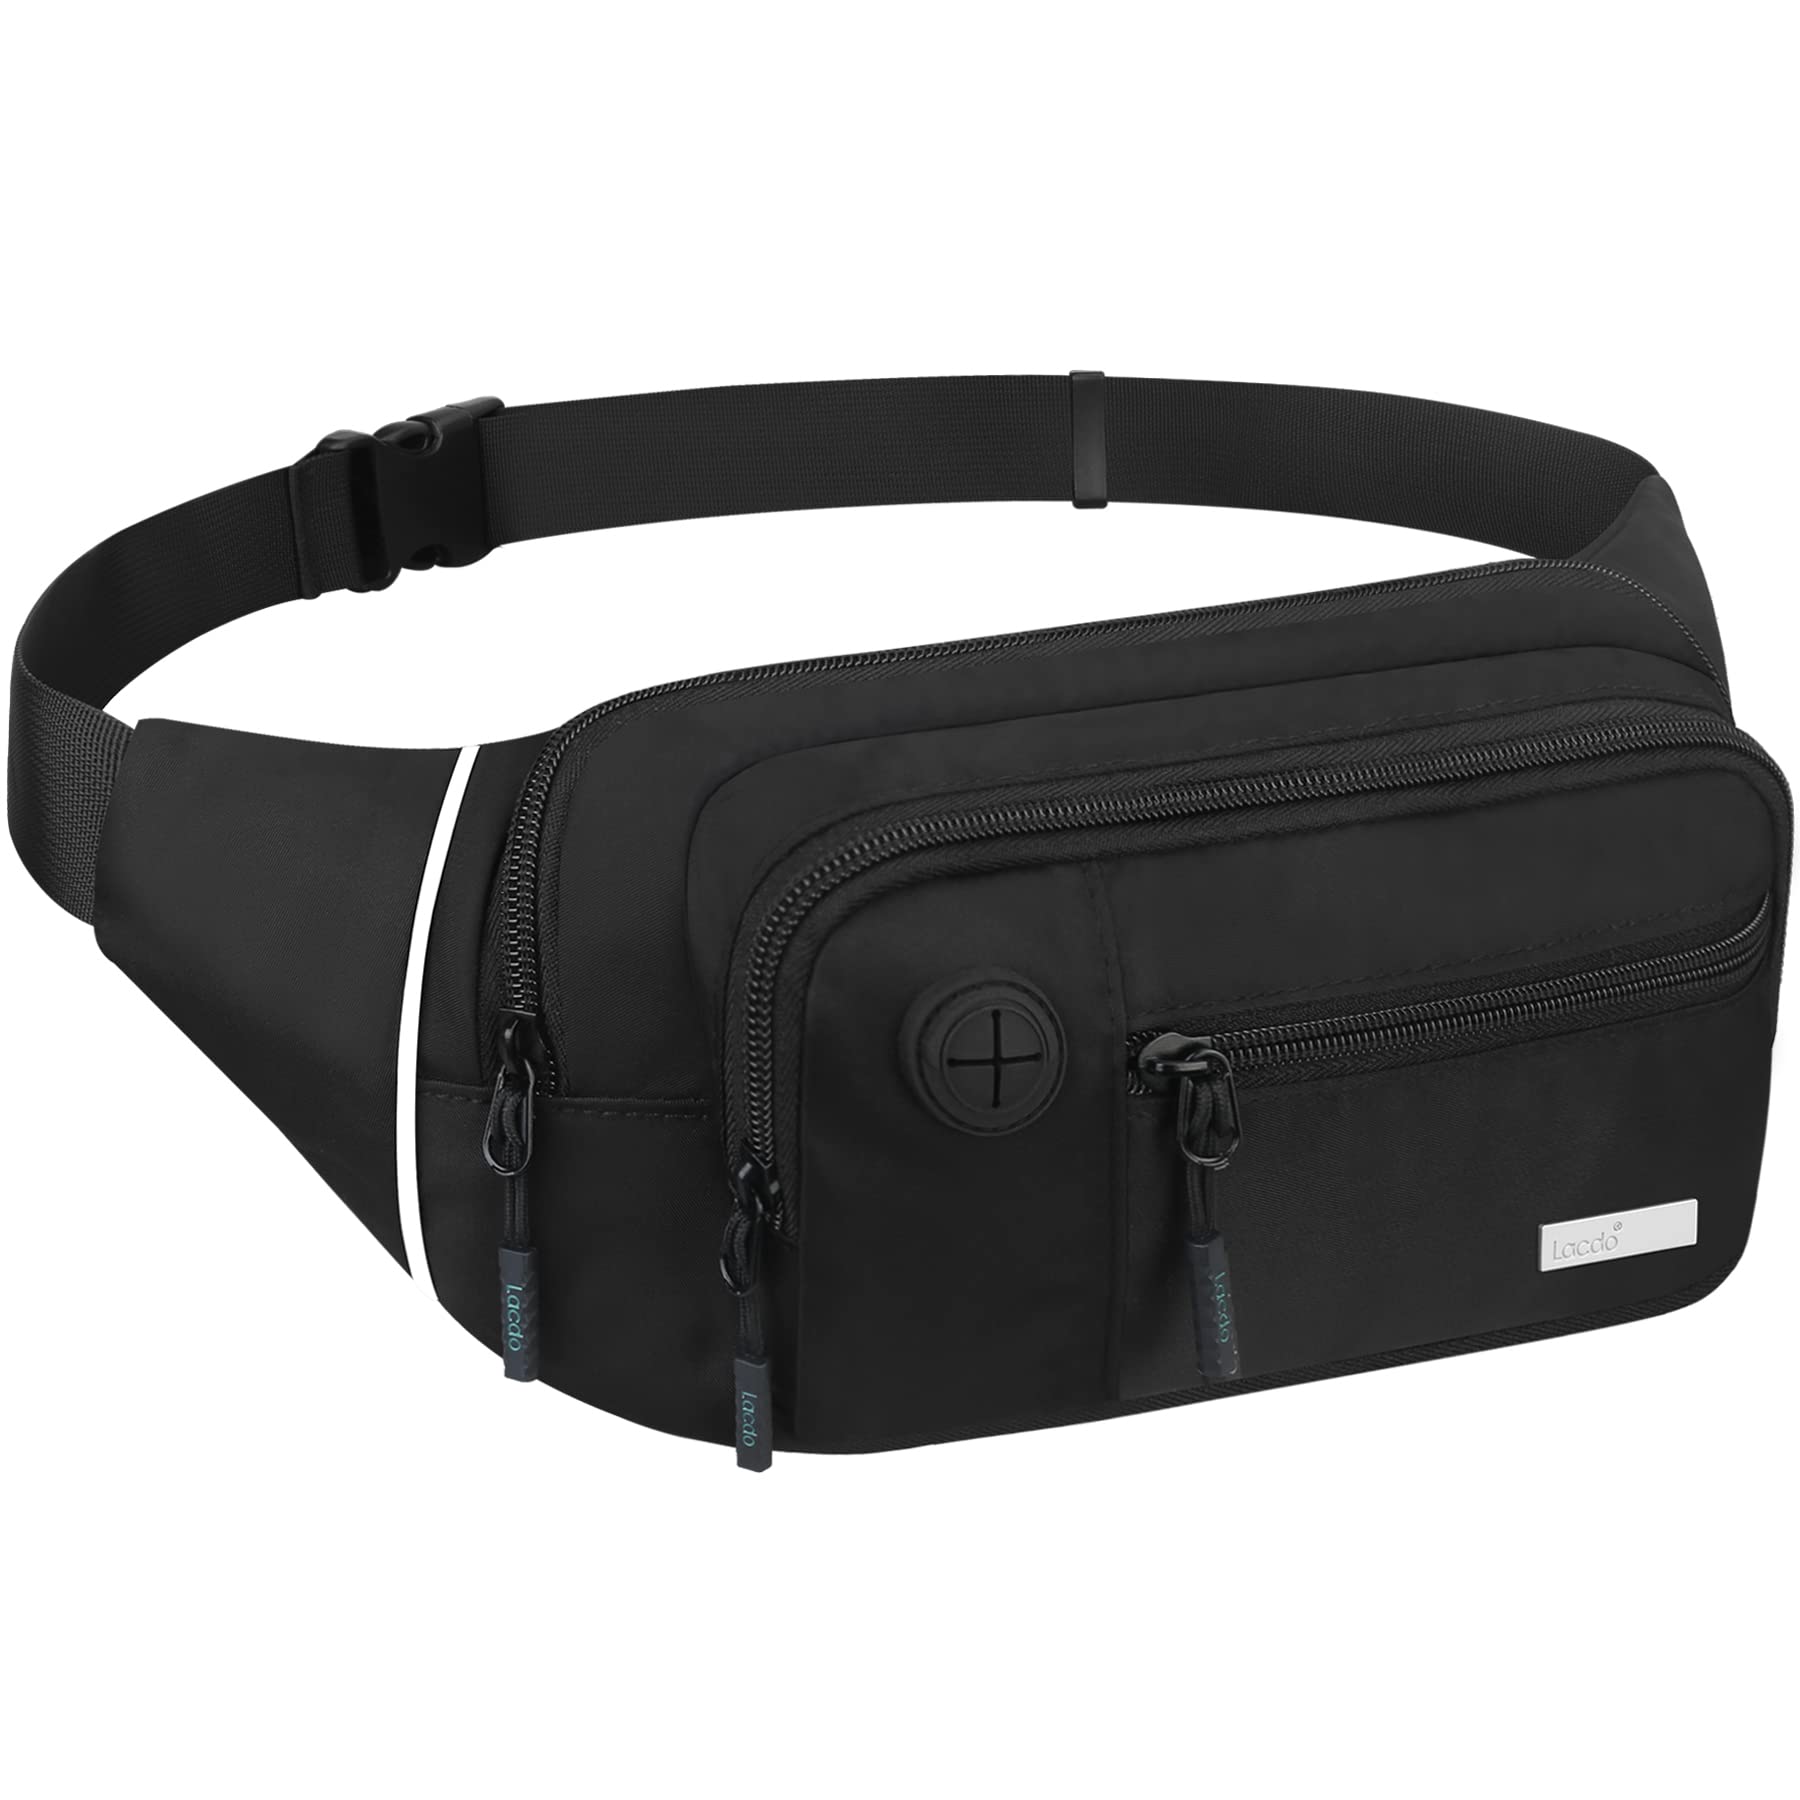 Lacdo Bum Bag for Travel Running Hiking Outdoor Sports Bag Waist Pack